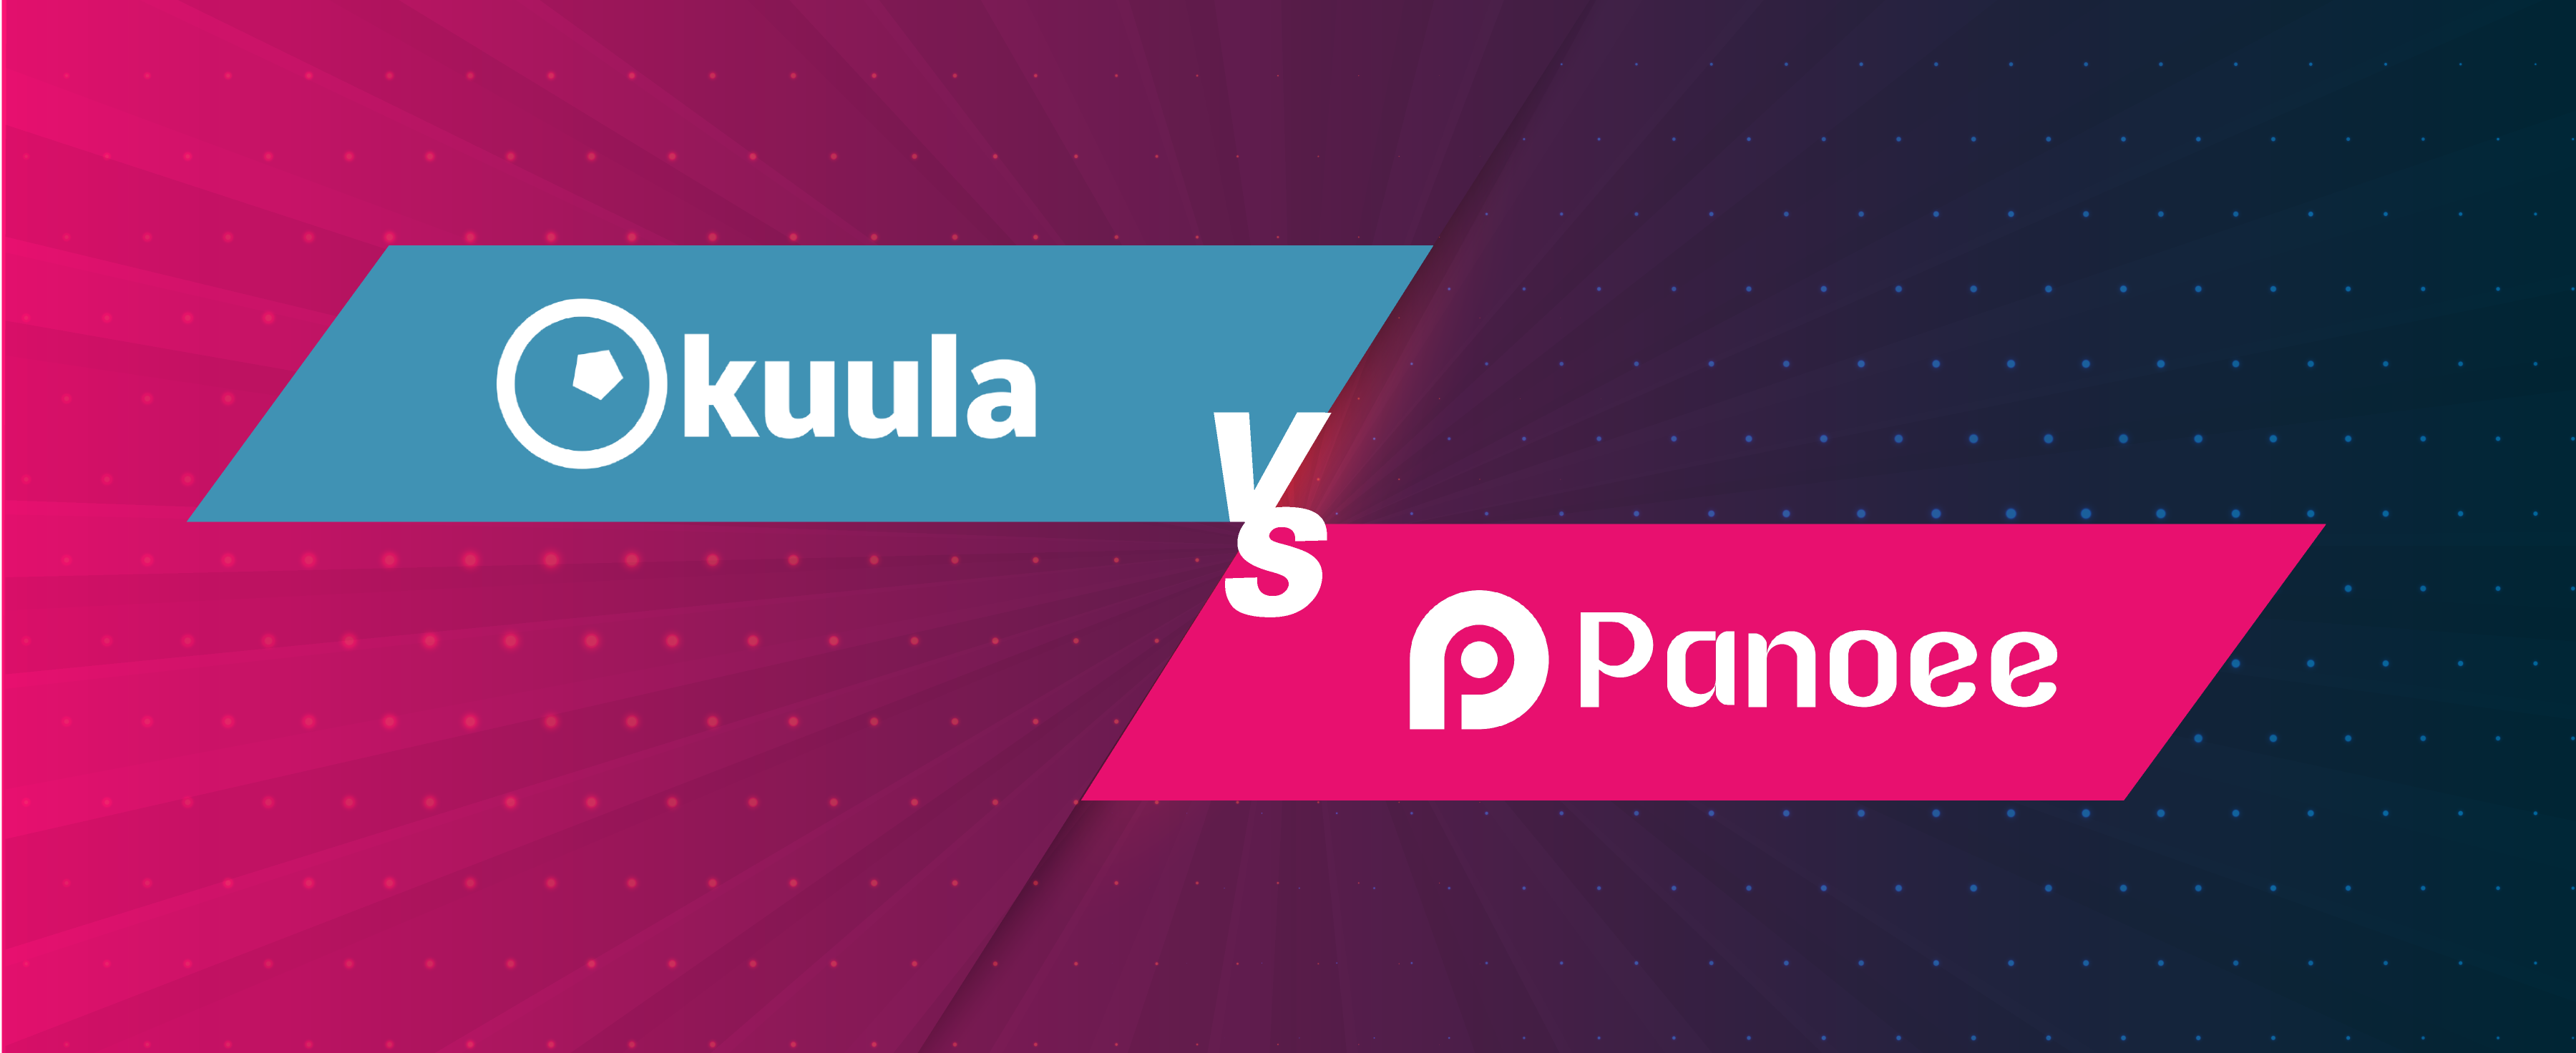 Overall comparison between Kuula and Panoee